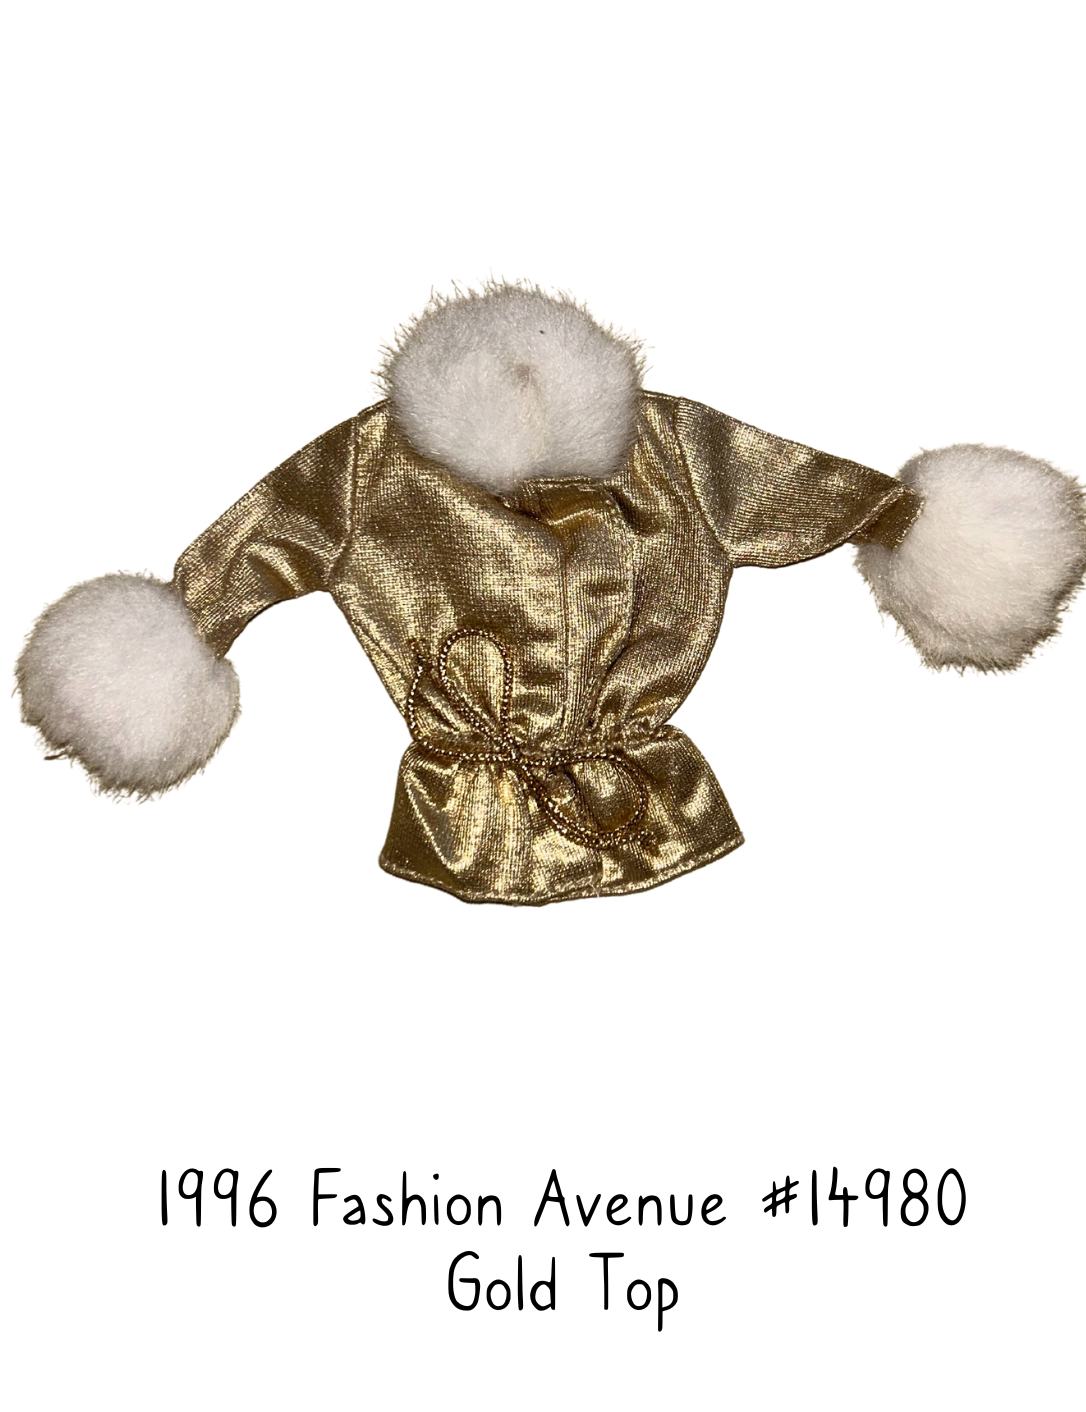 1996 Barbie Fashion Avenue #14980 Gold Top